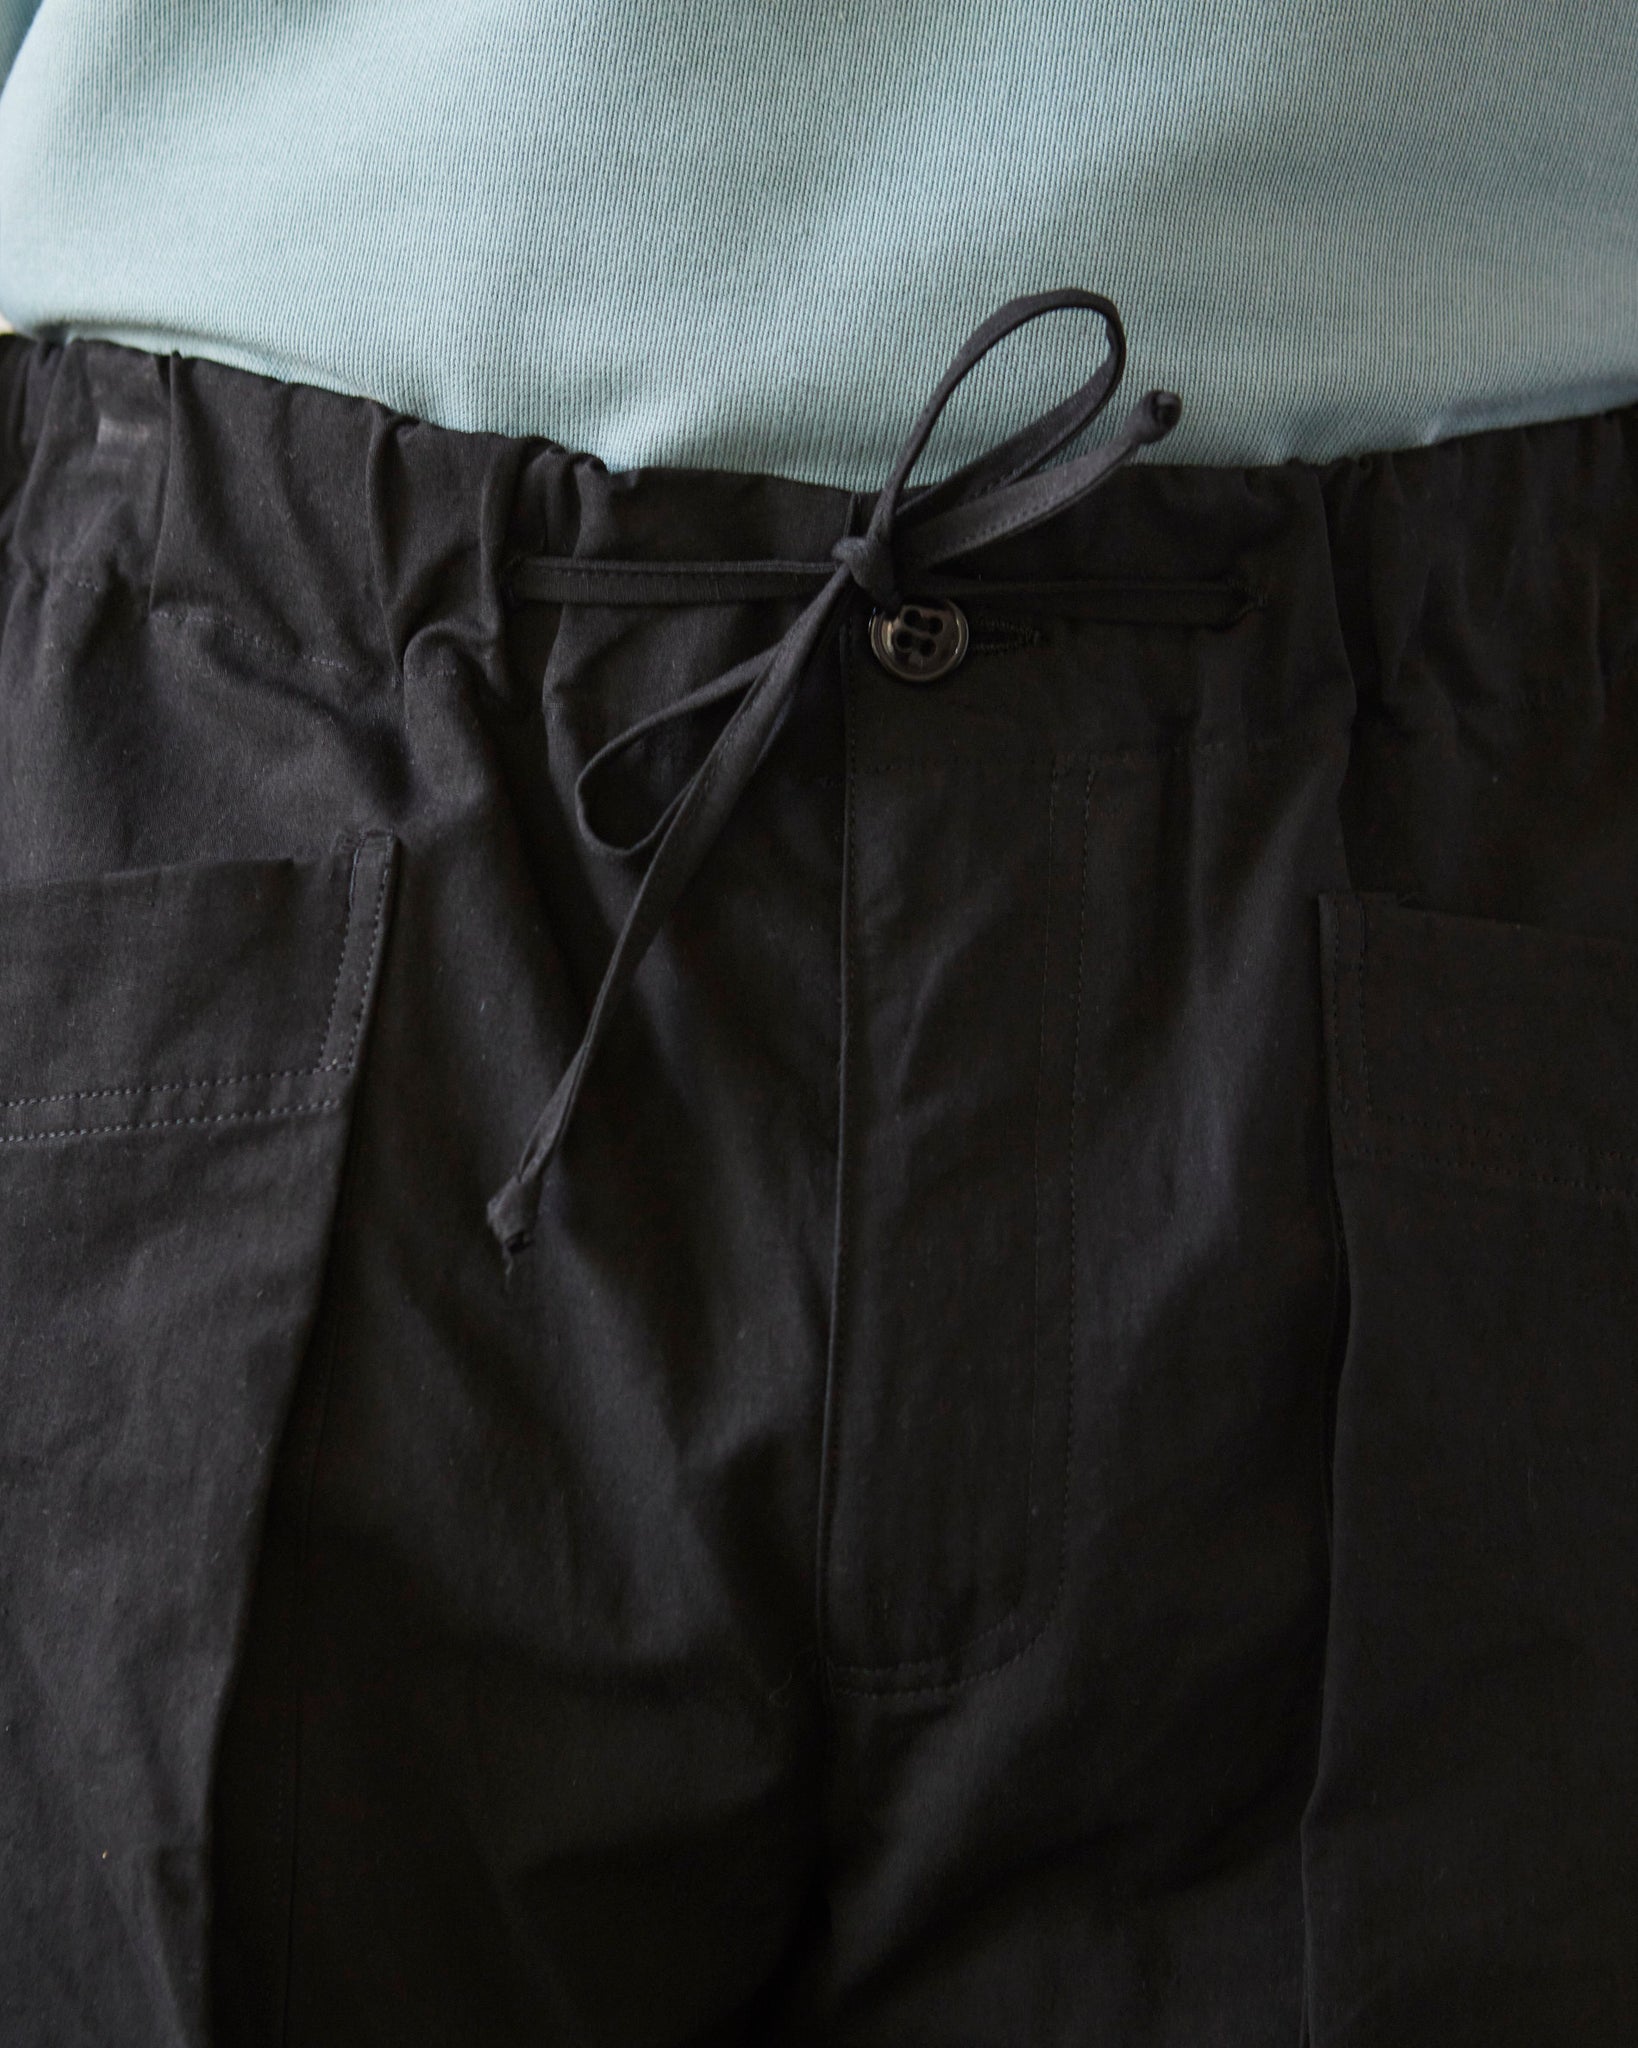 Arpenteur Cargo S Shorts, Black